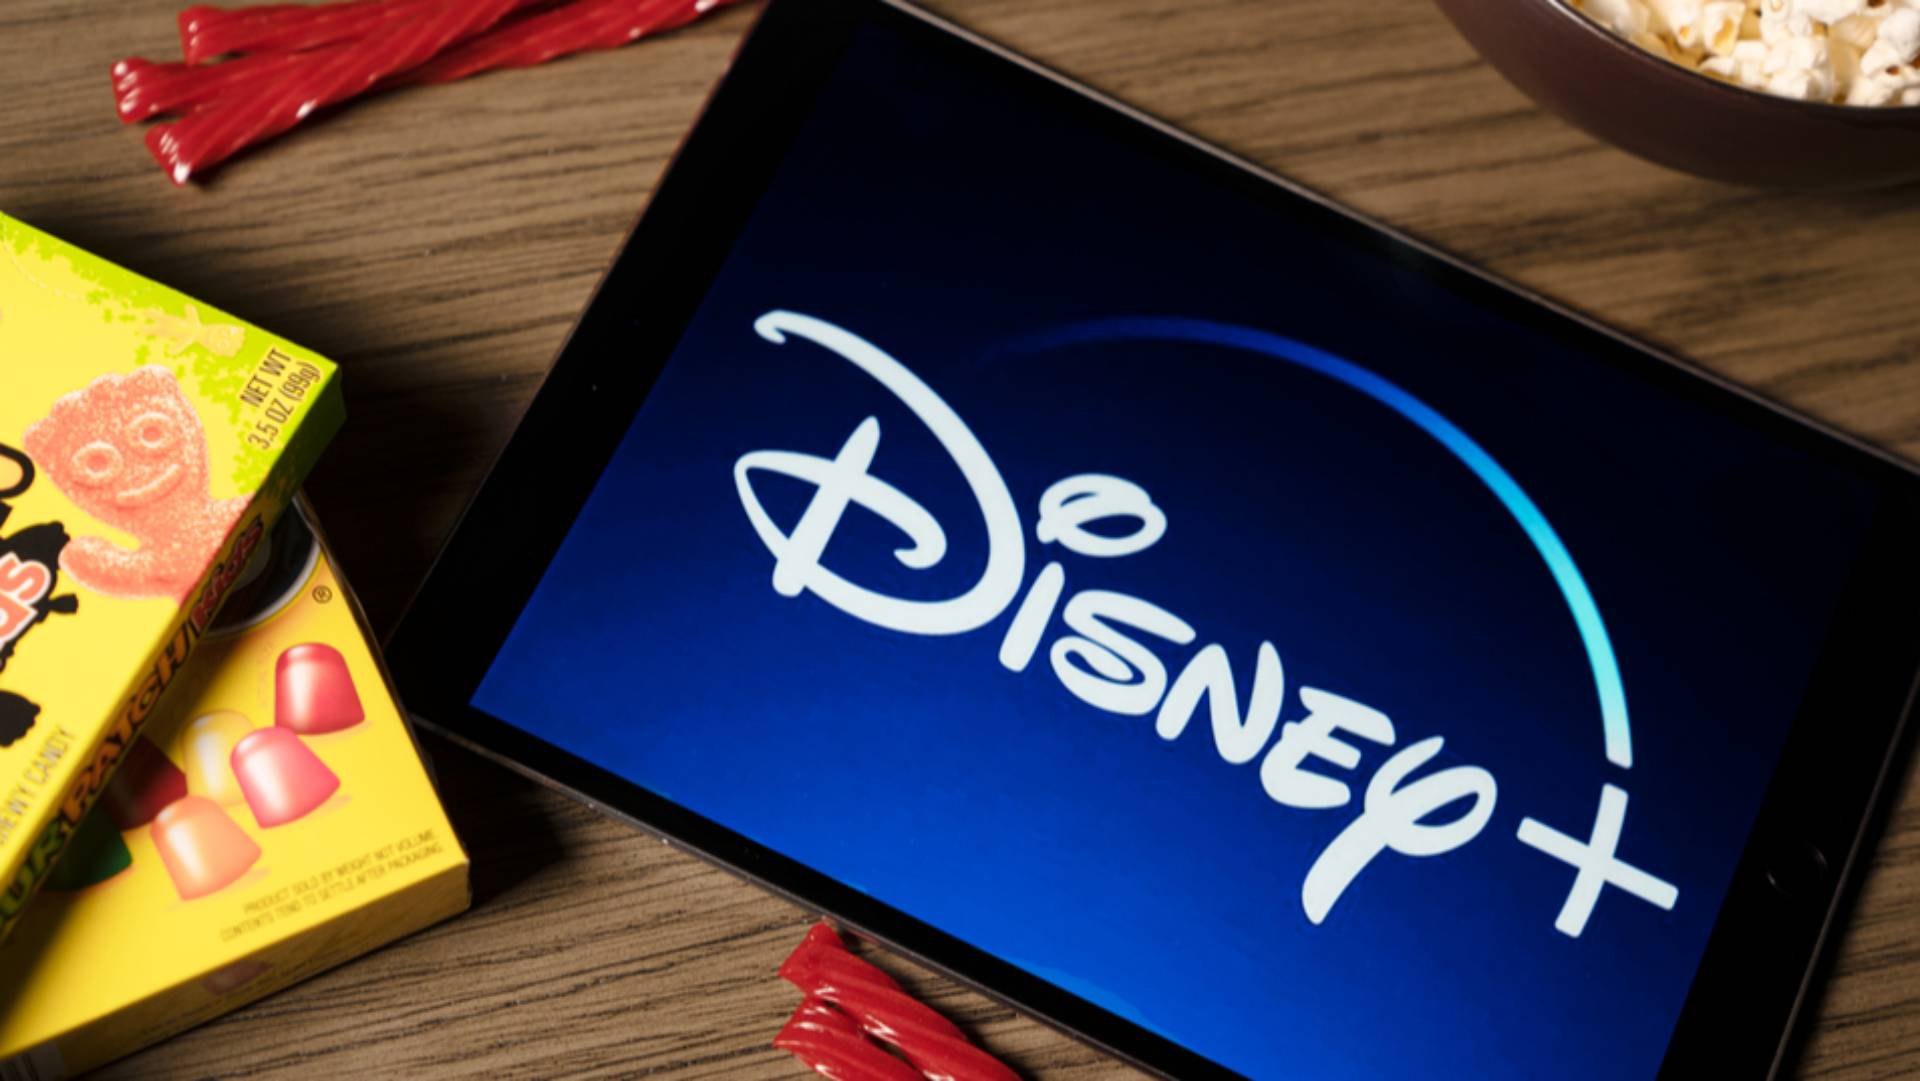 Disney+ ultrapassa a marca de 73 milhões de assinantes